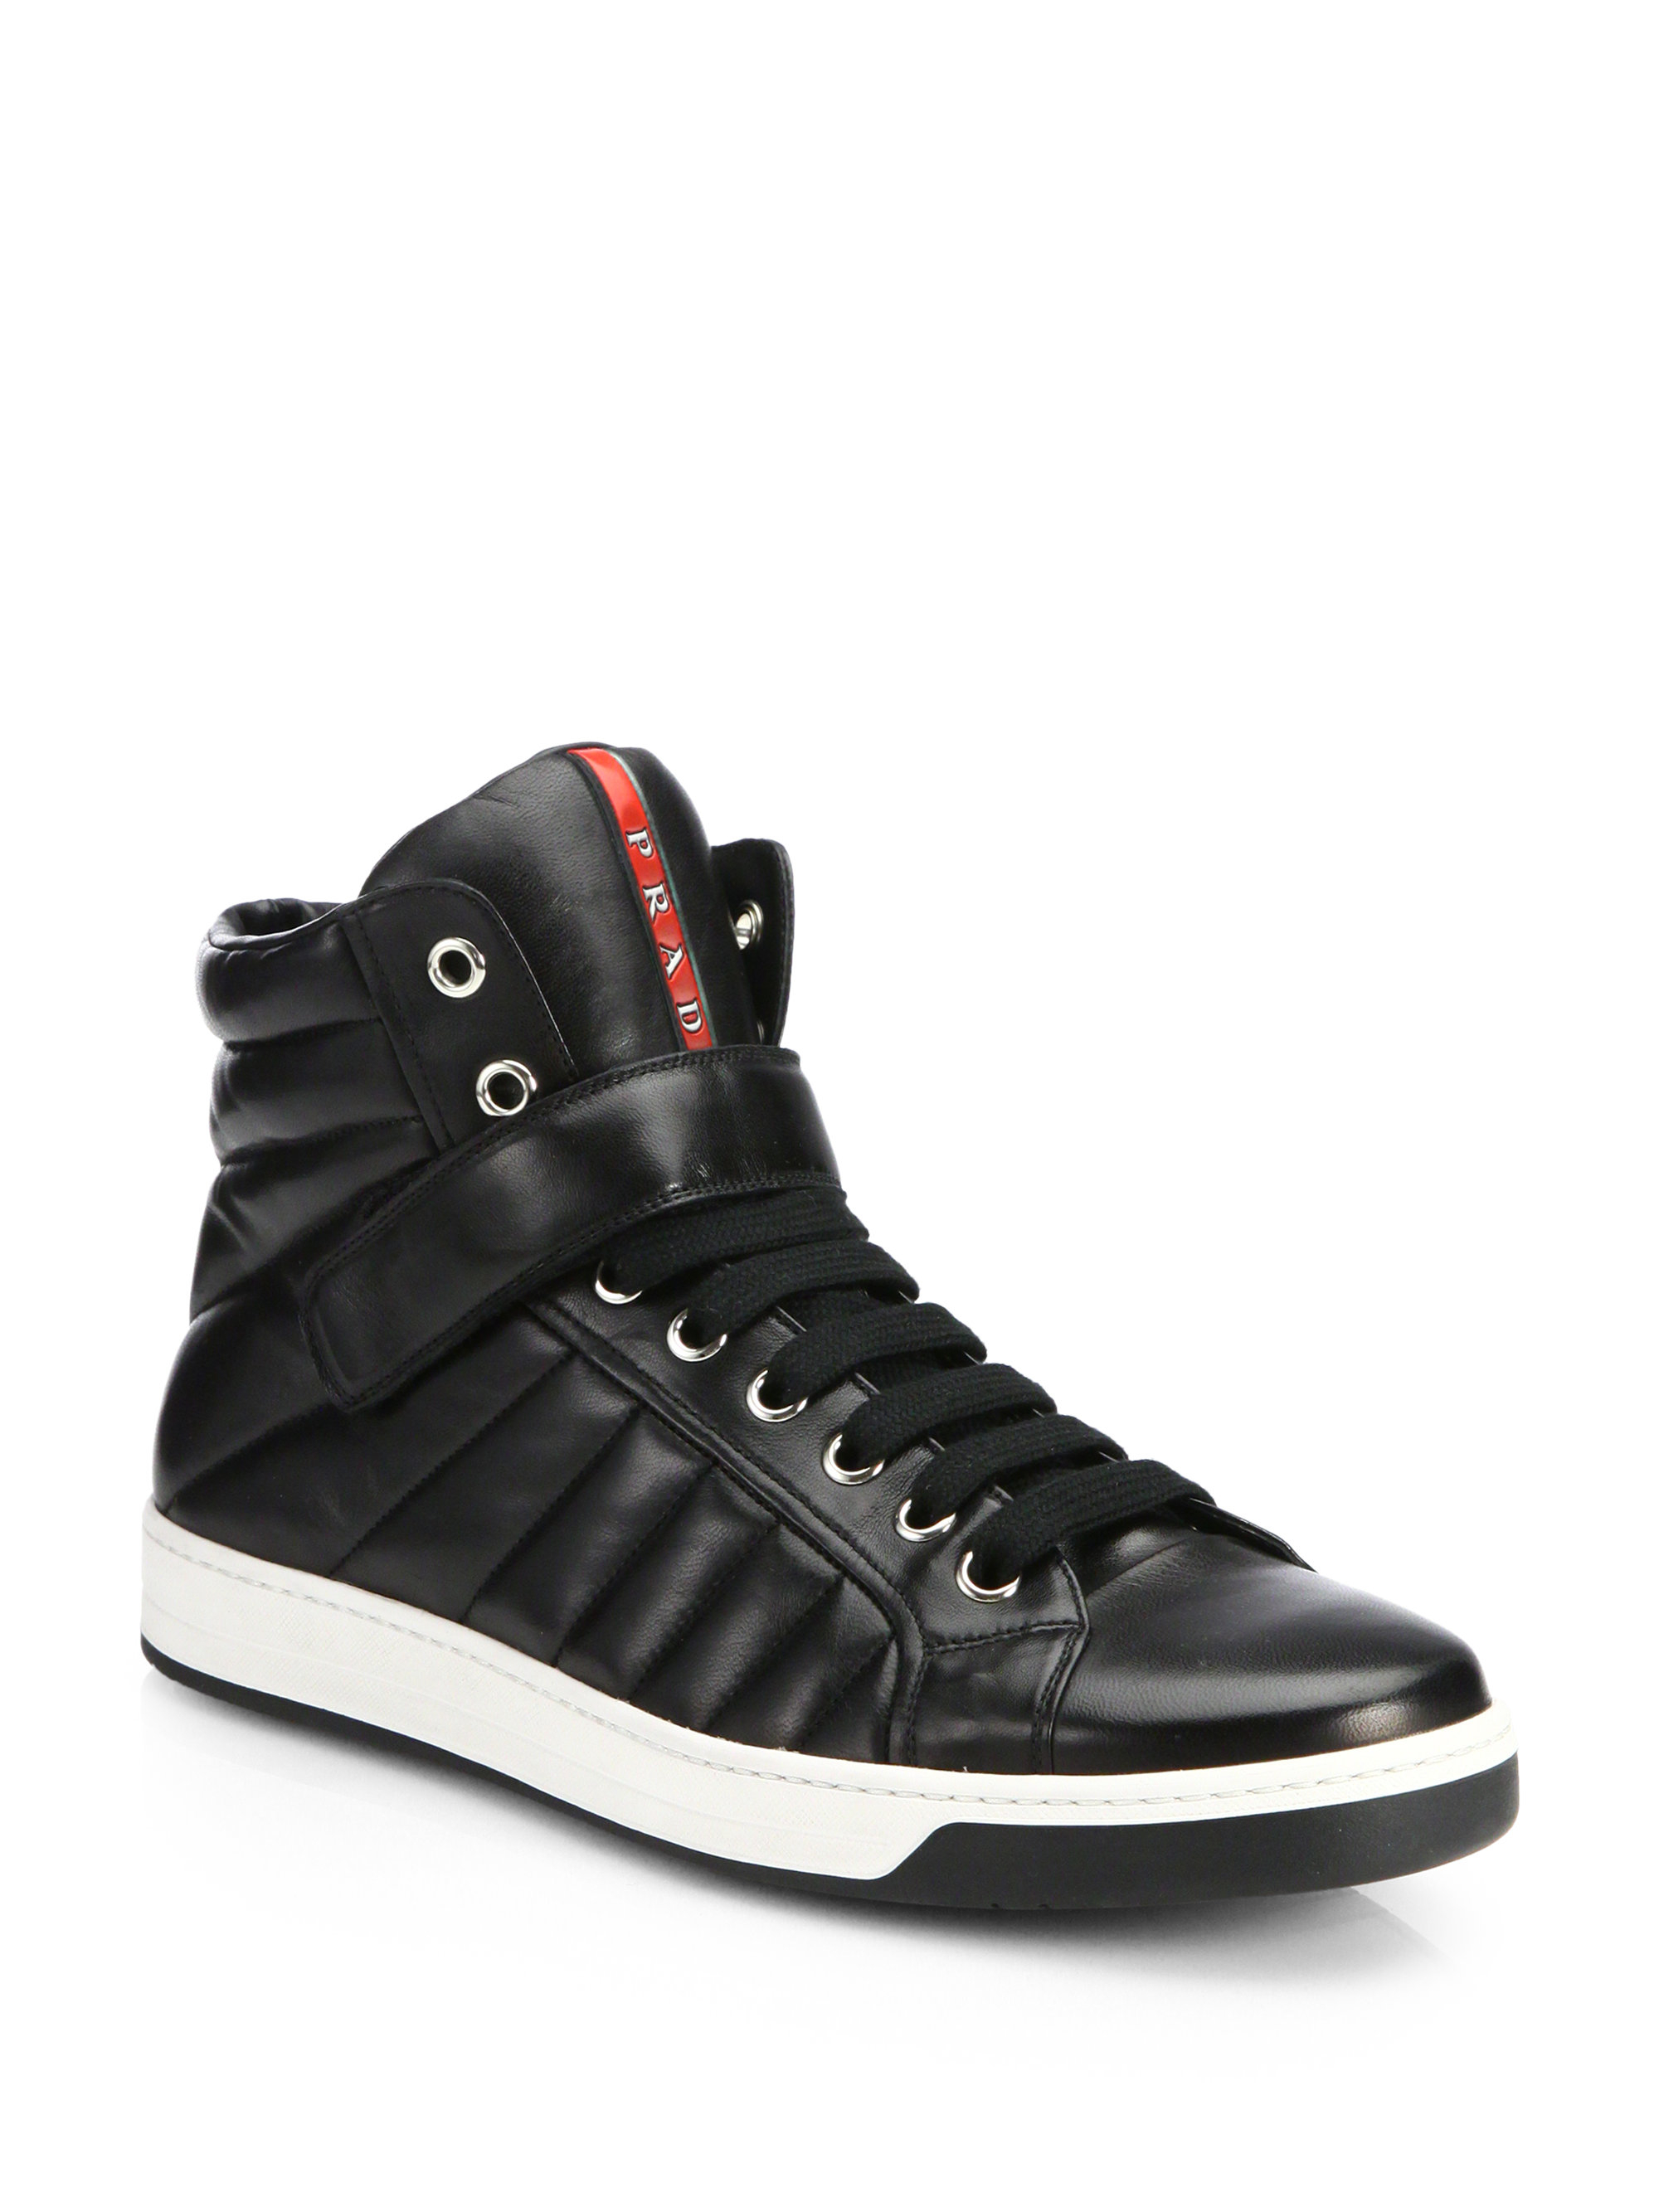 Prada Nappa Leather High-Top Sneakers in Black for Men | Lyst